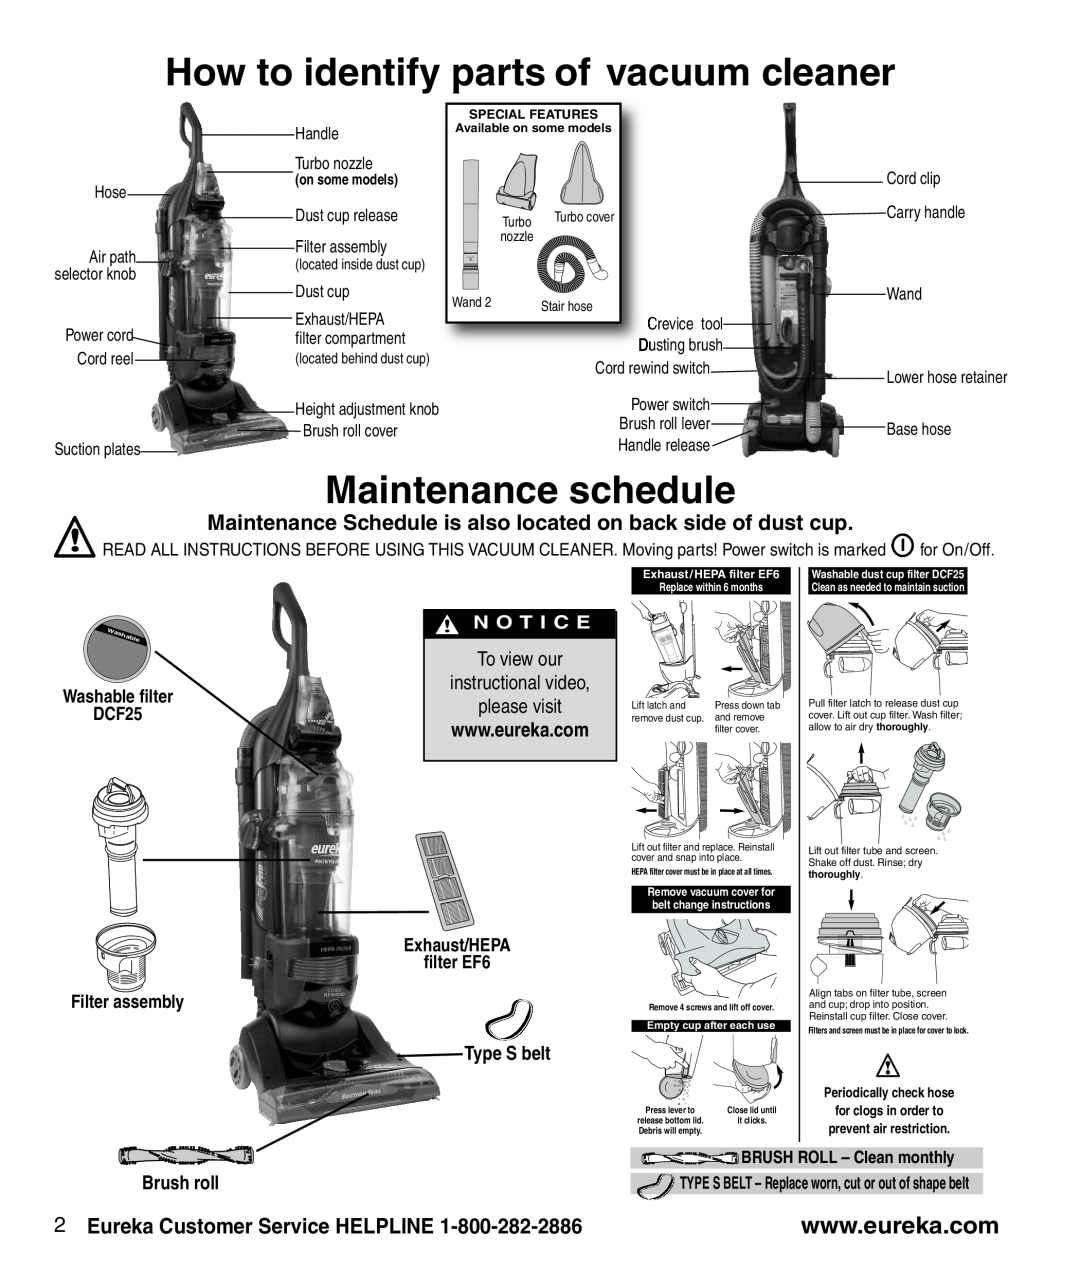 Eureka AS1001A How to identify parts of vacuum cleaner, Maintenance schedule, Eureka Customer Service HELPLINE, Brush roll 